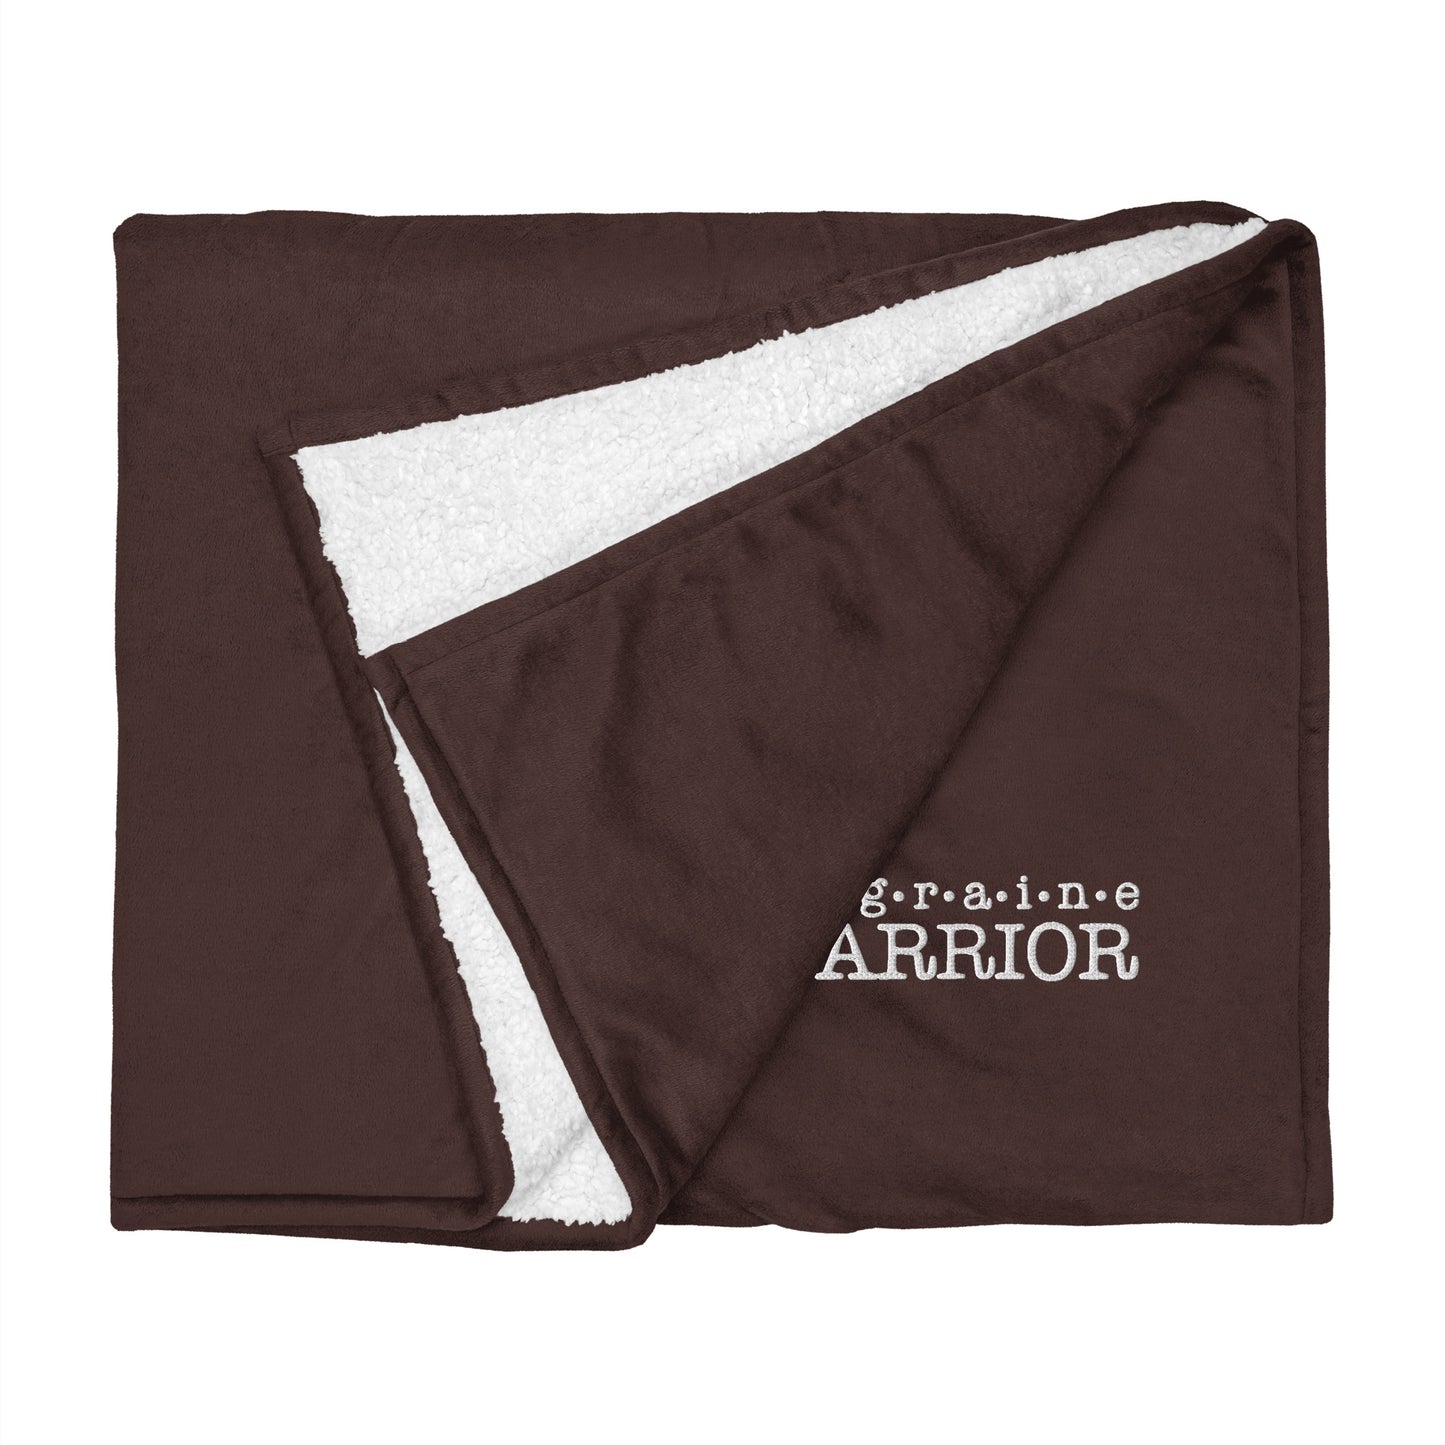 Migraine Warrior Premium Sherpa Blanket